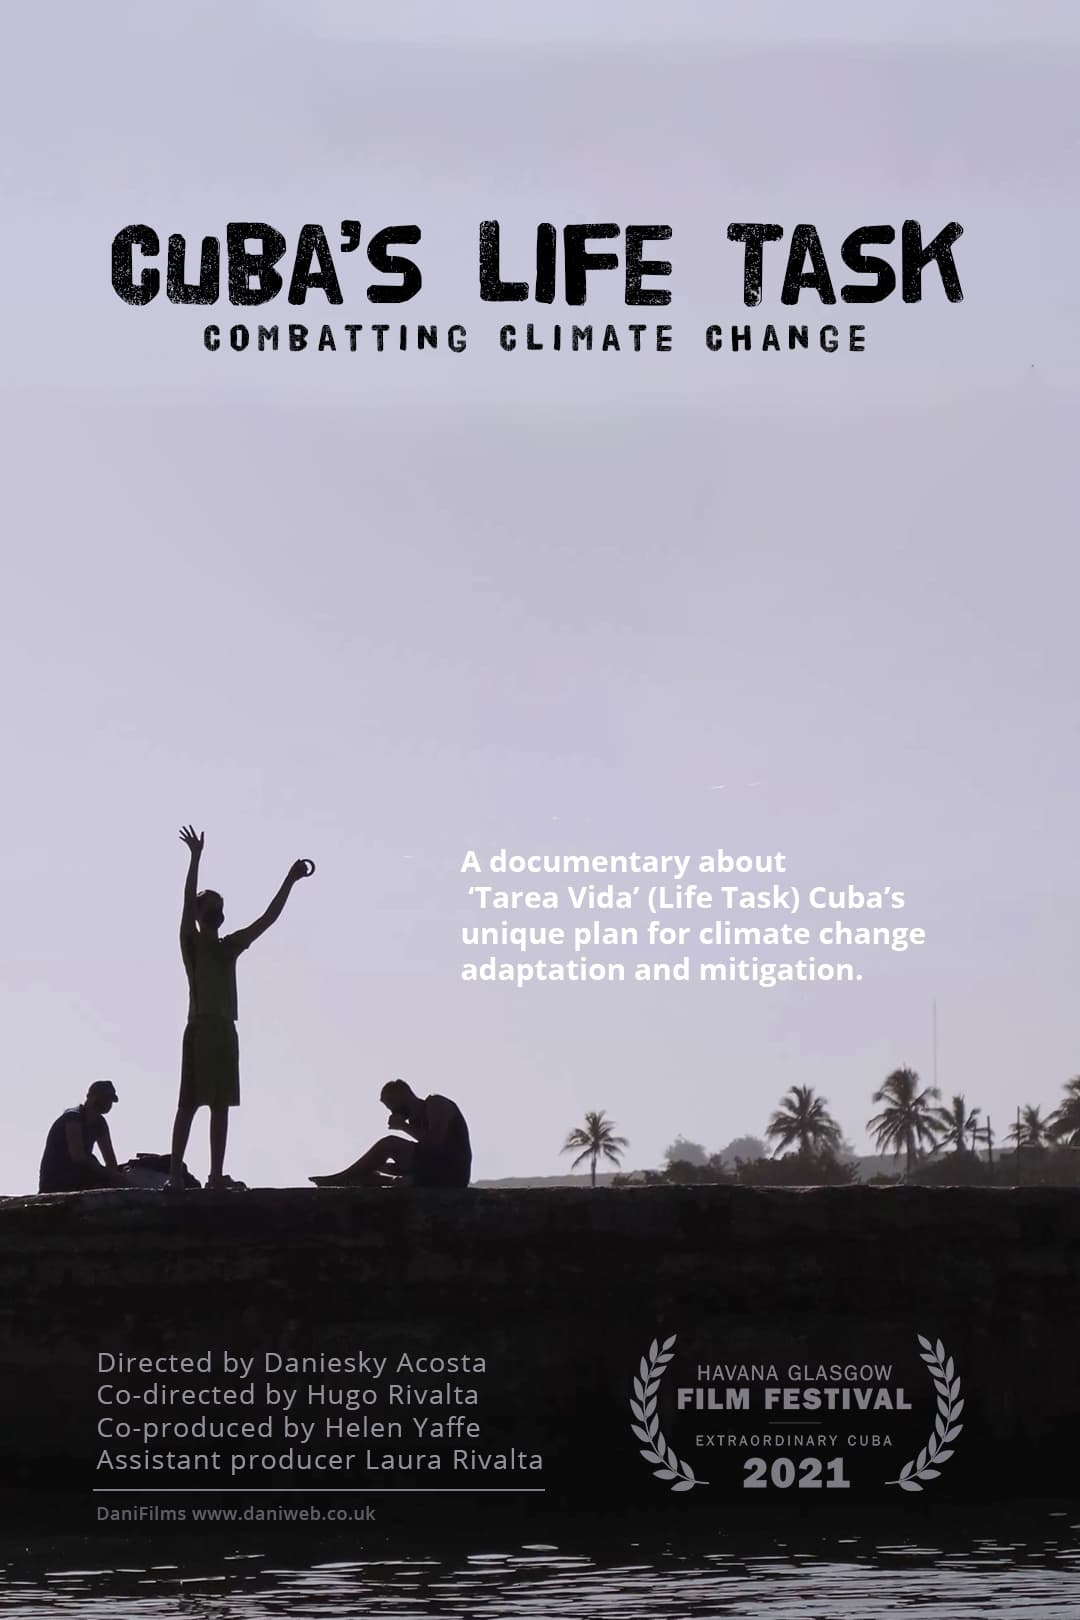 Cuba’s Life Task: Combatting Climate Change